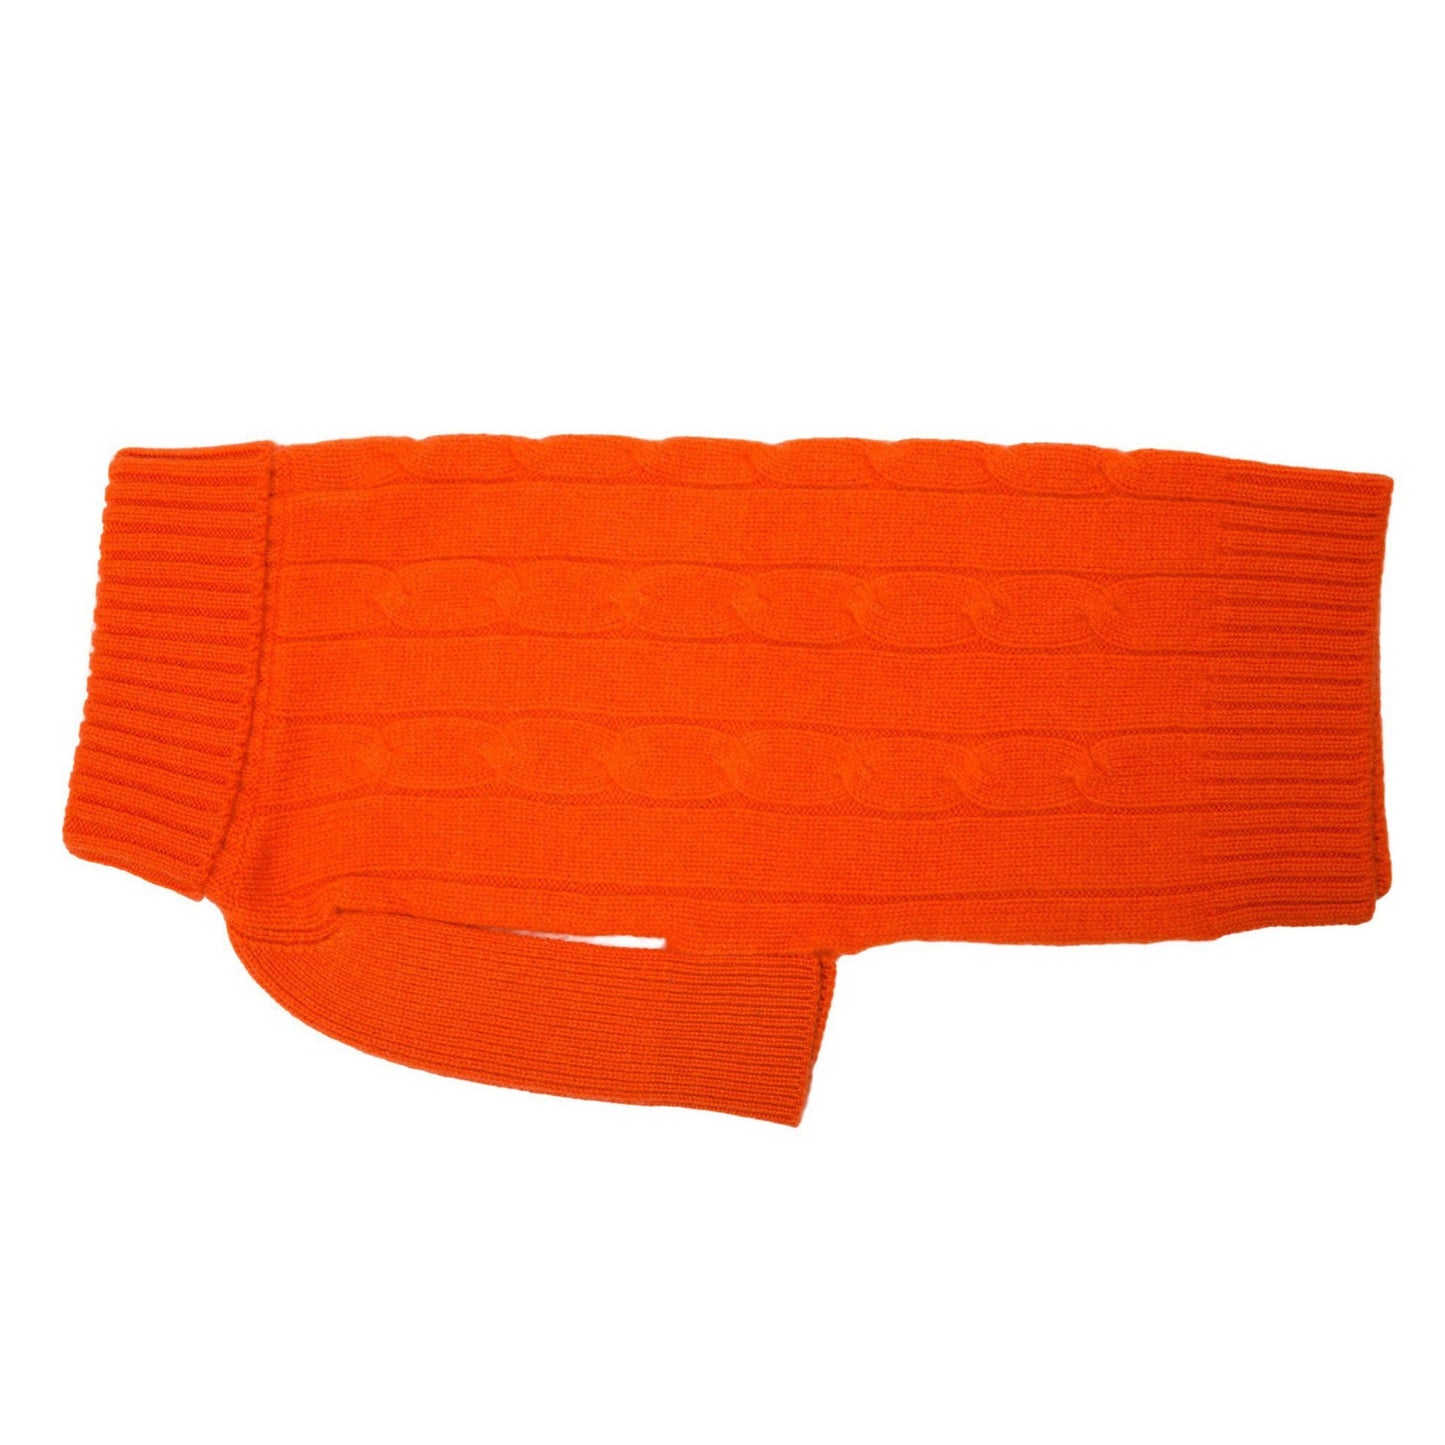 Cableknit Cashmere Dog Sweater, Orange